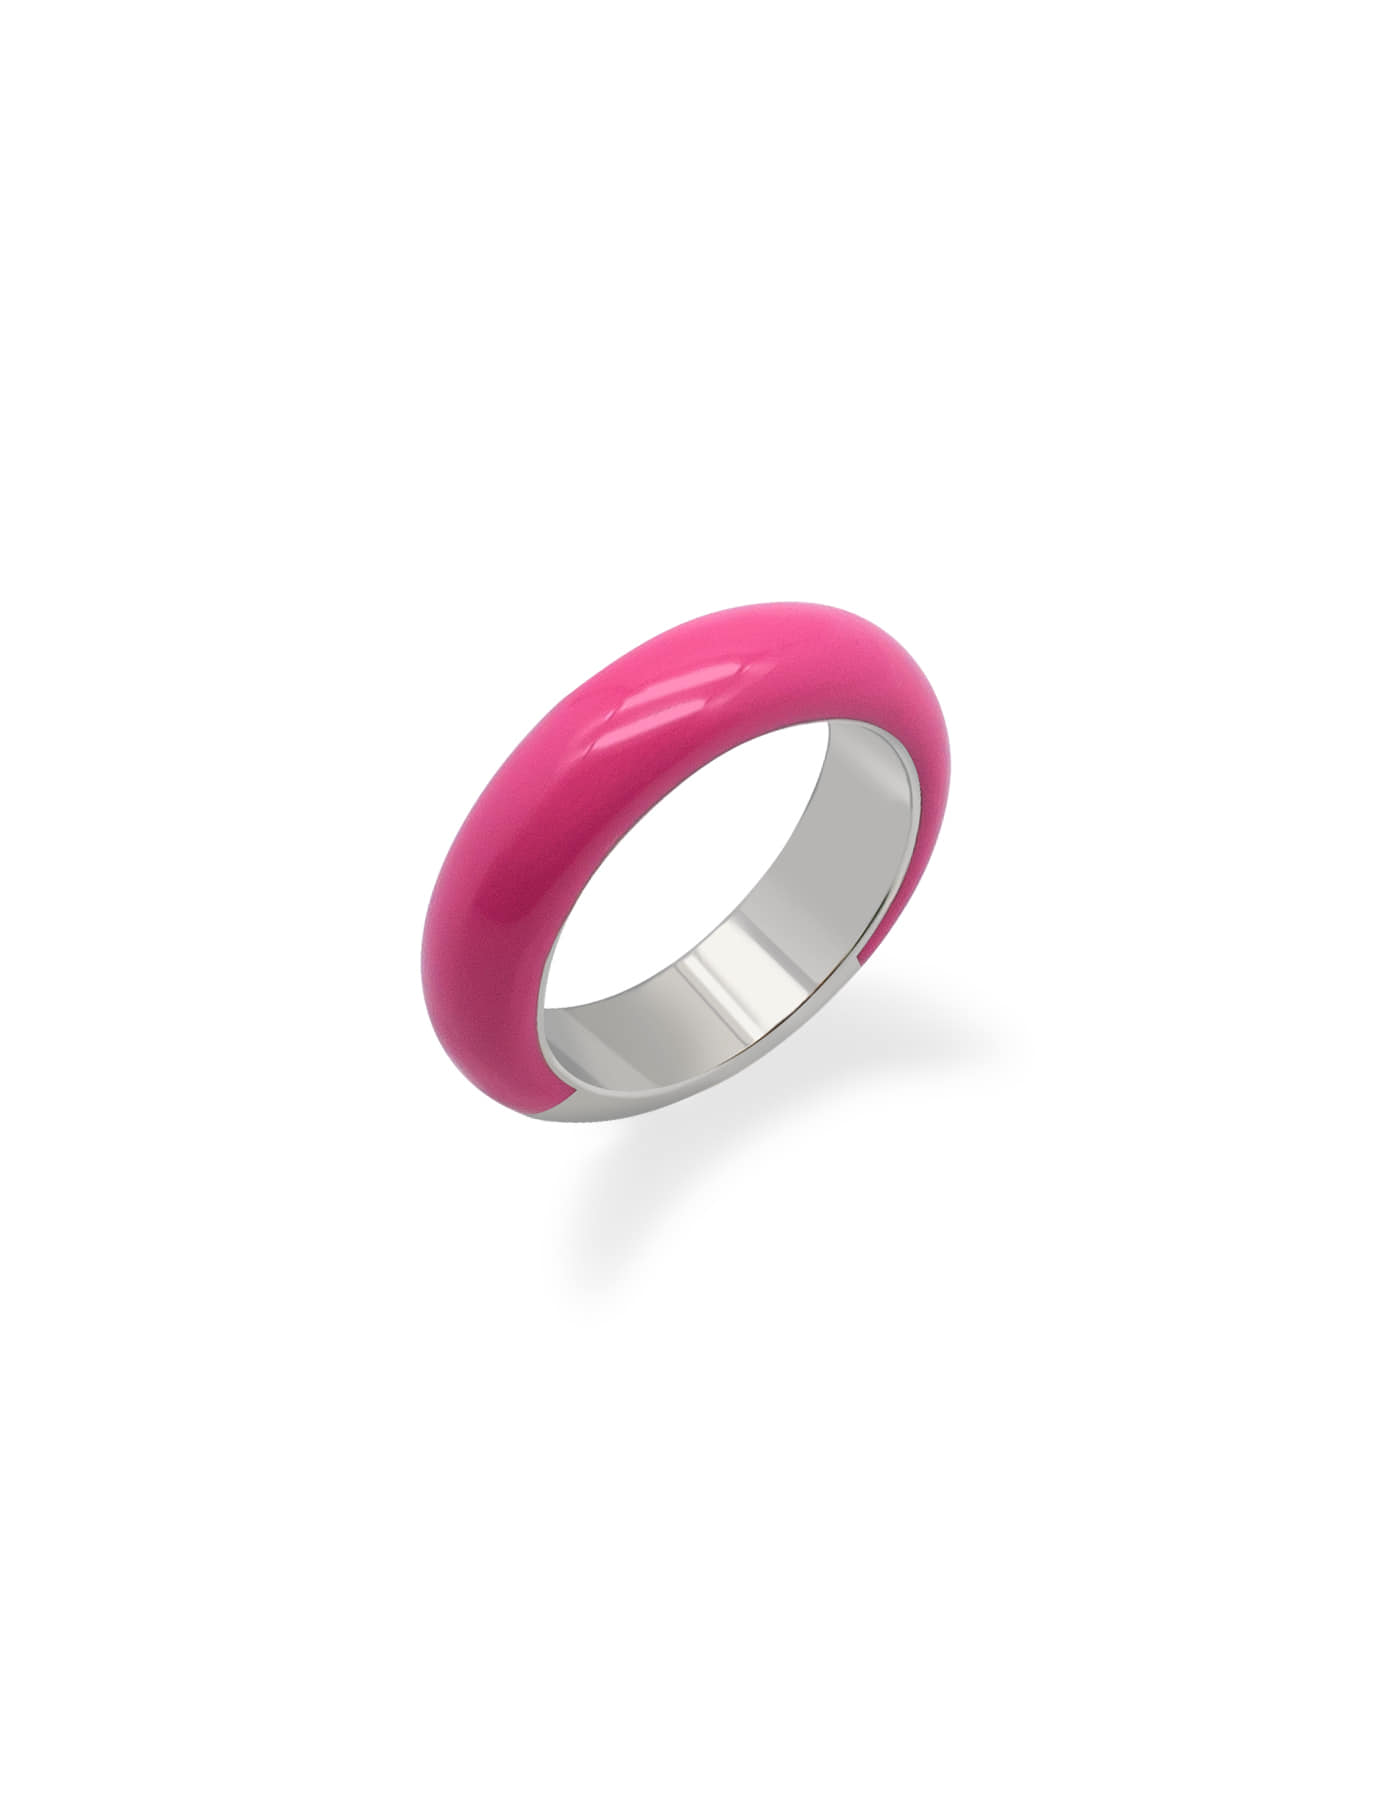 Balloon epoxy ring (Hot pink)